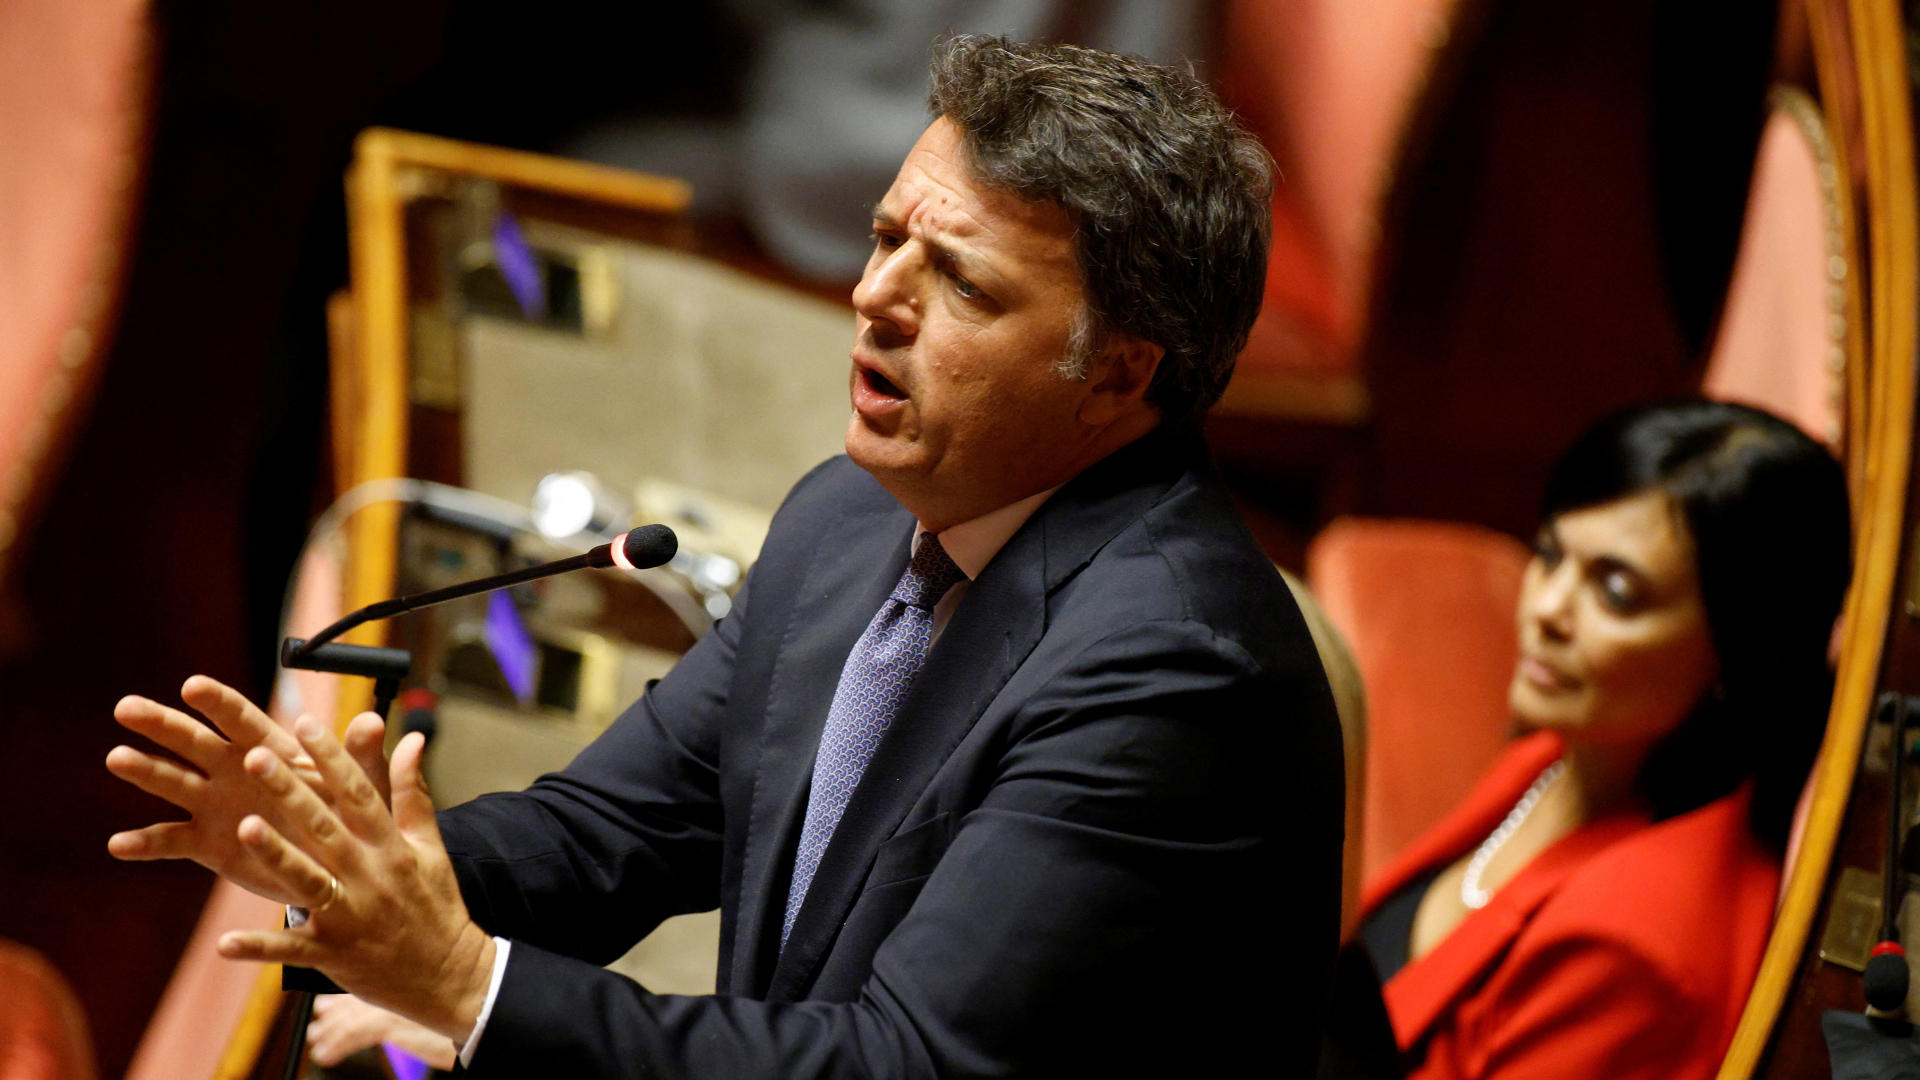 Matteo Renzi spricht im Parlament in Rom (Italien) | REUTERS